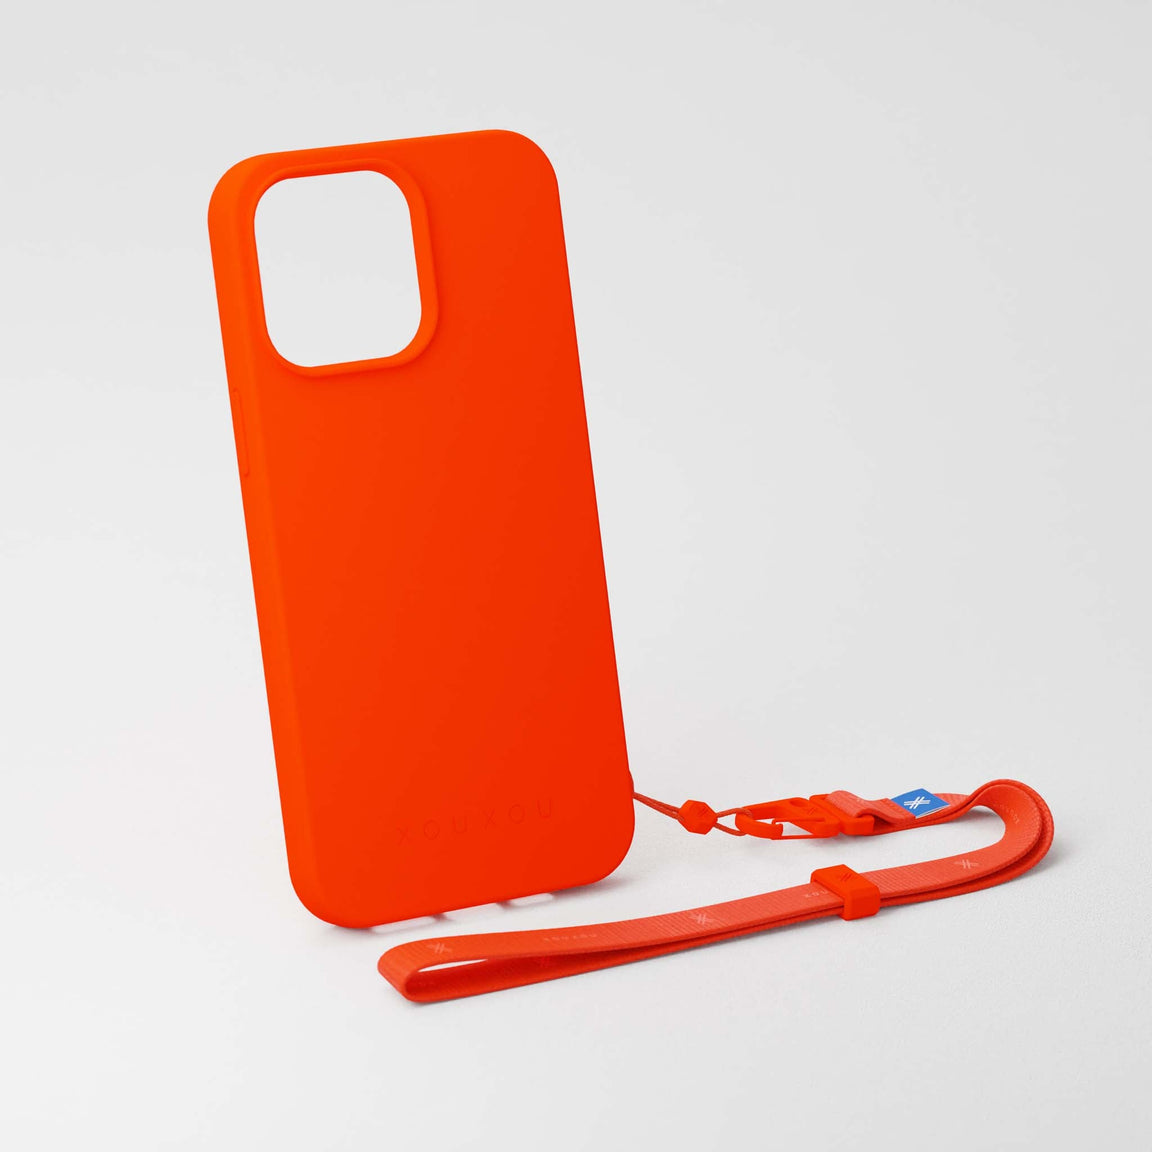 Neon Orange Phone Case with Wrist Strap tone in tone | XOUXOU